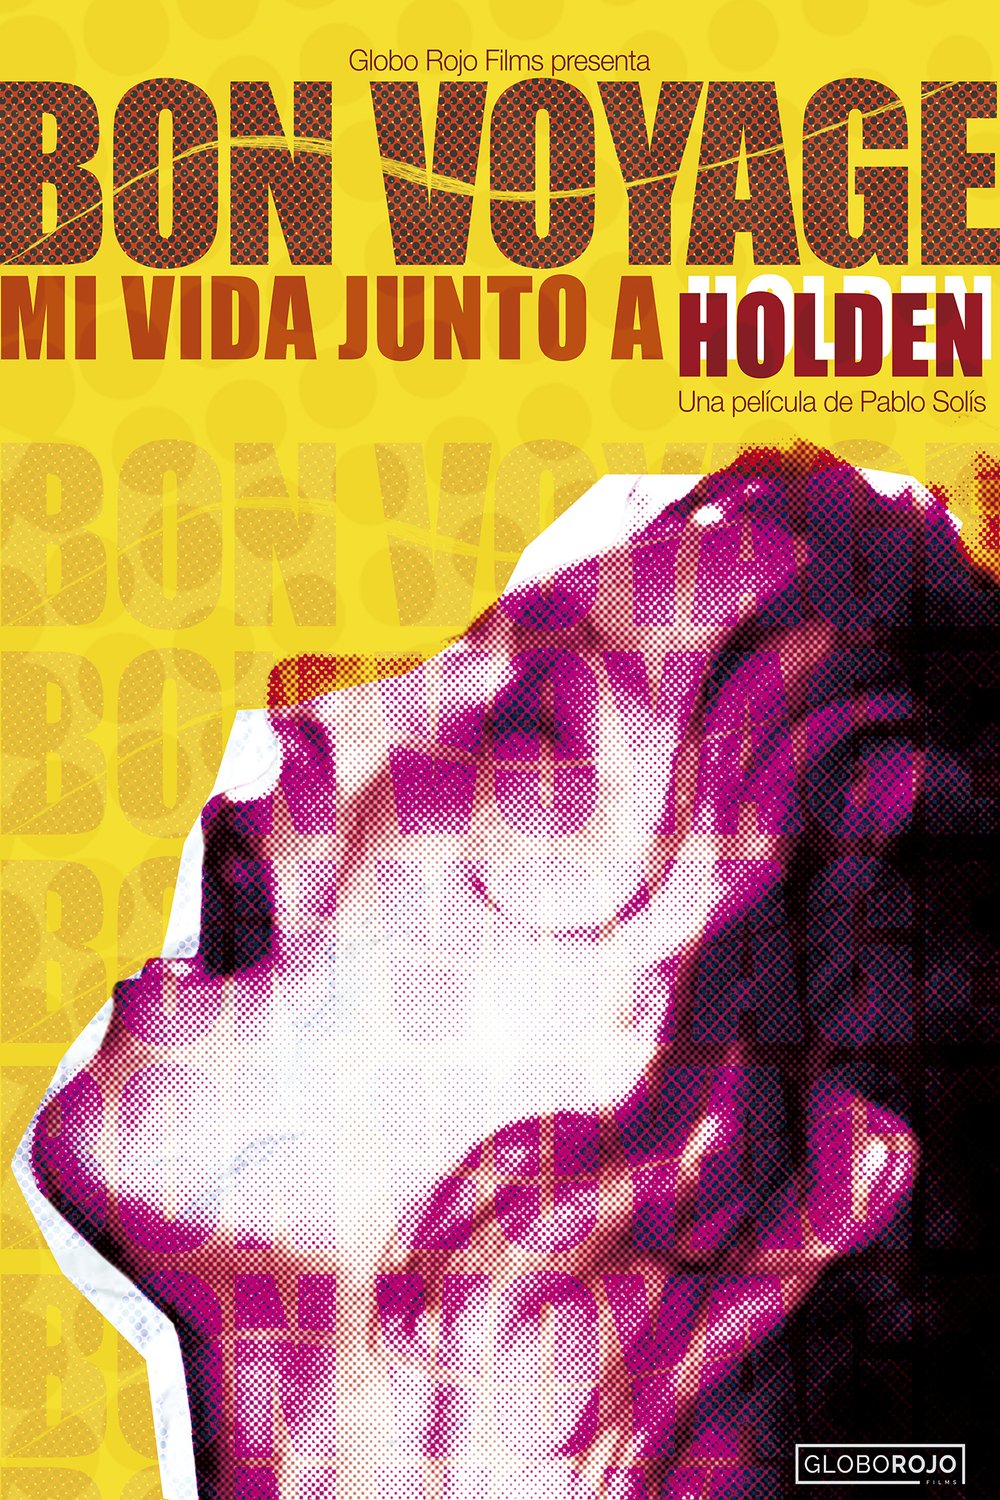 L'affiche originale du film Bon voyage, my life with Holden en espagnol